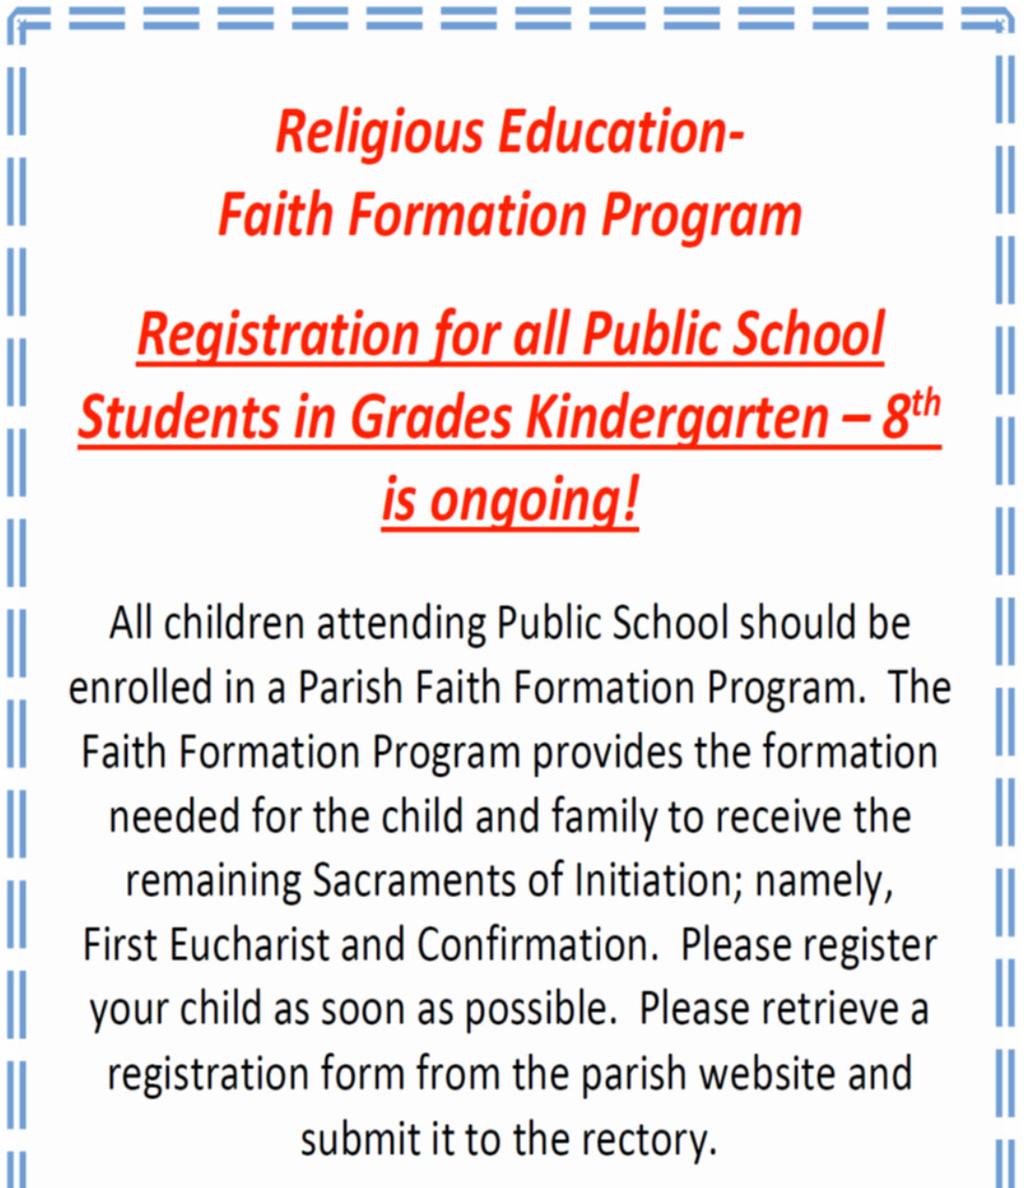 Regarding the Faith Formation Program (children attending public schools), registration is on-going!